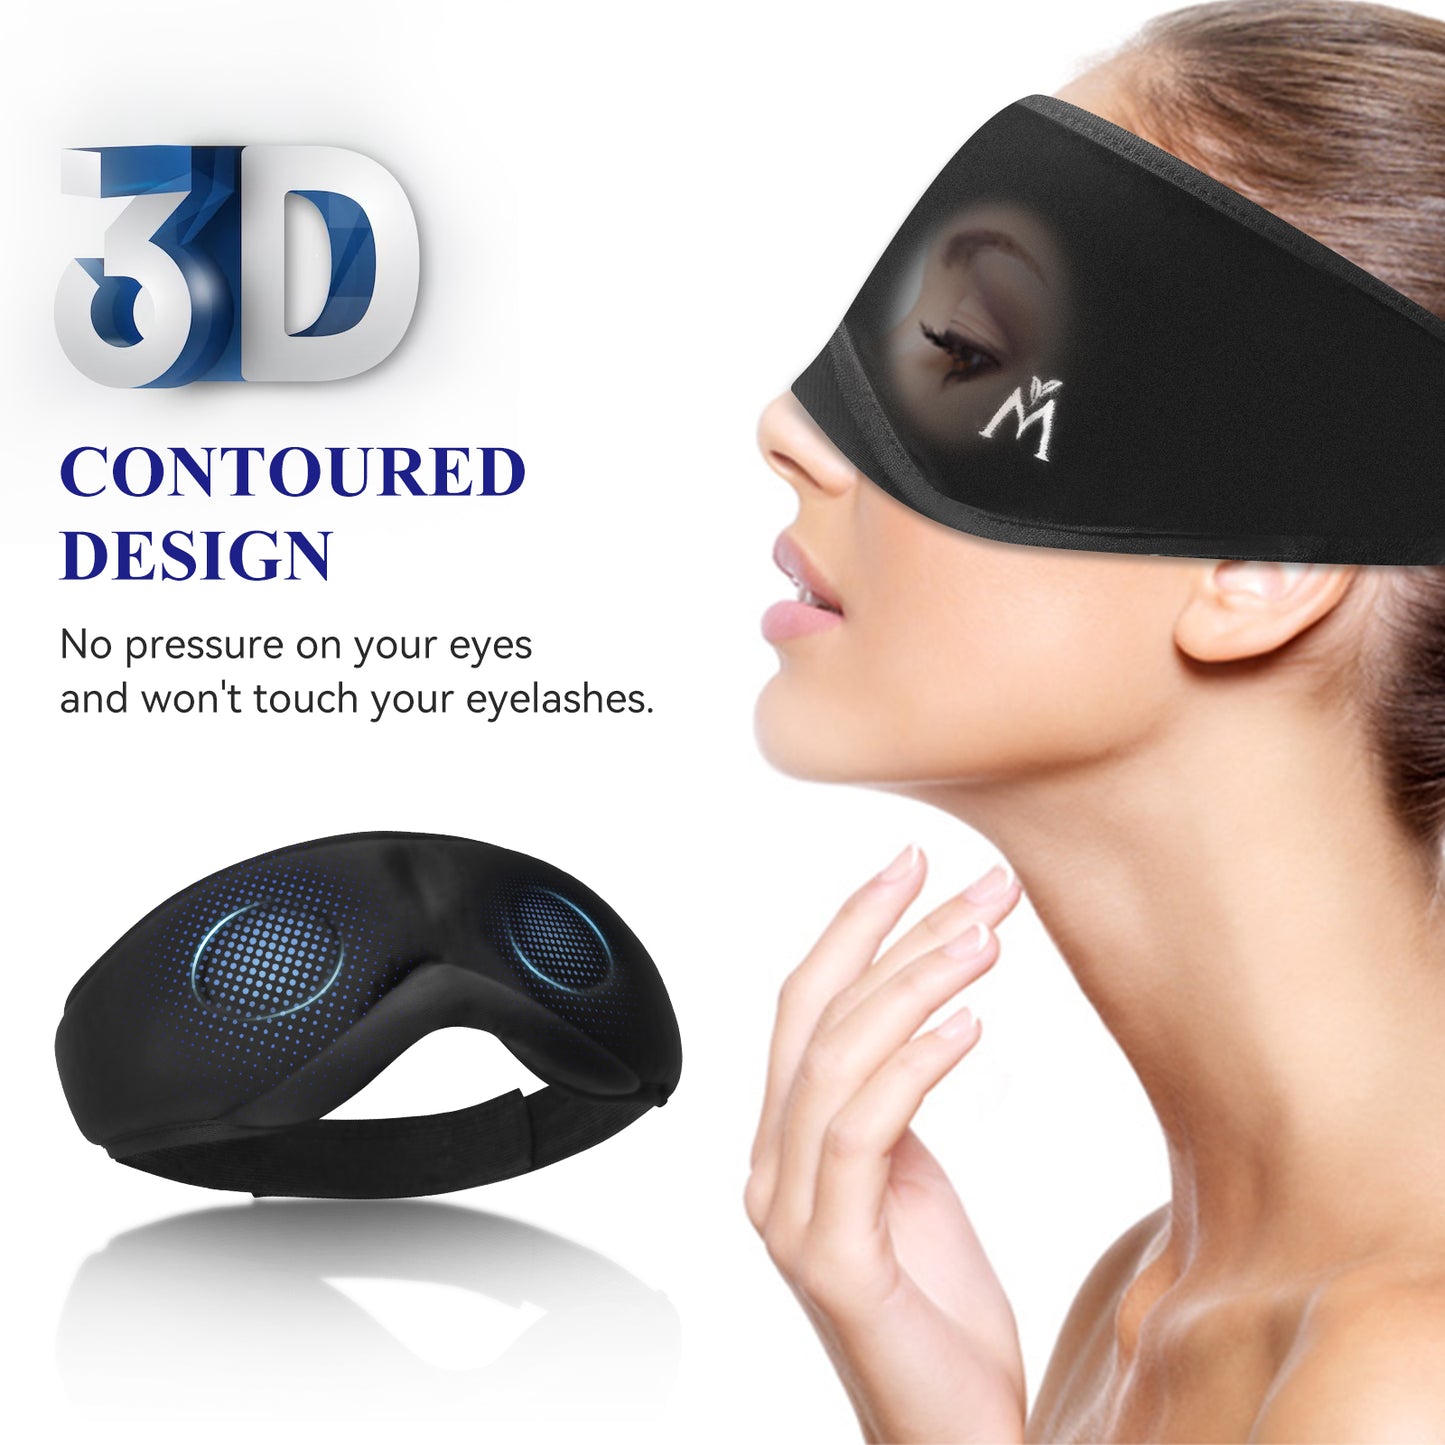 Mavogel 3D Contoured Cup Sleeping Eye Mask, Zero Eye Pressure Night Blindfold, Block Out Light for Naps/Shift Work